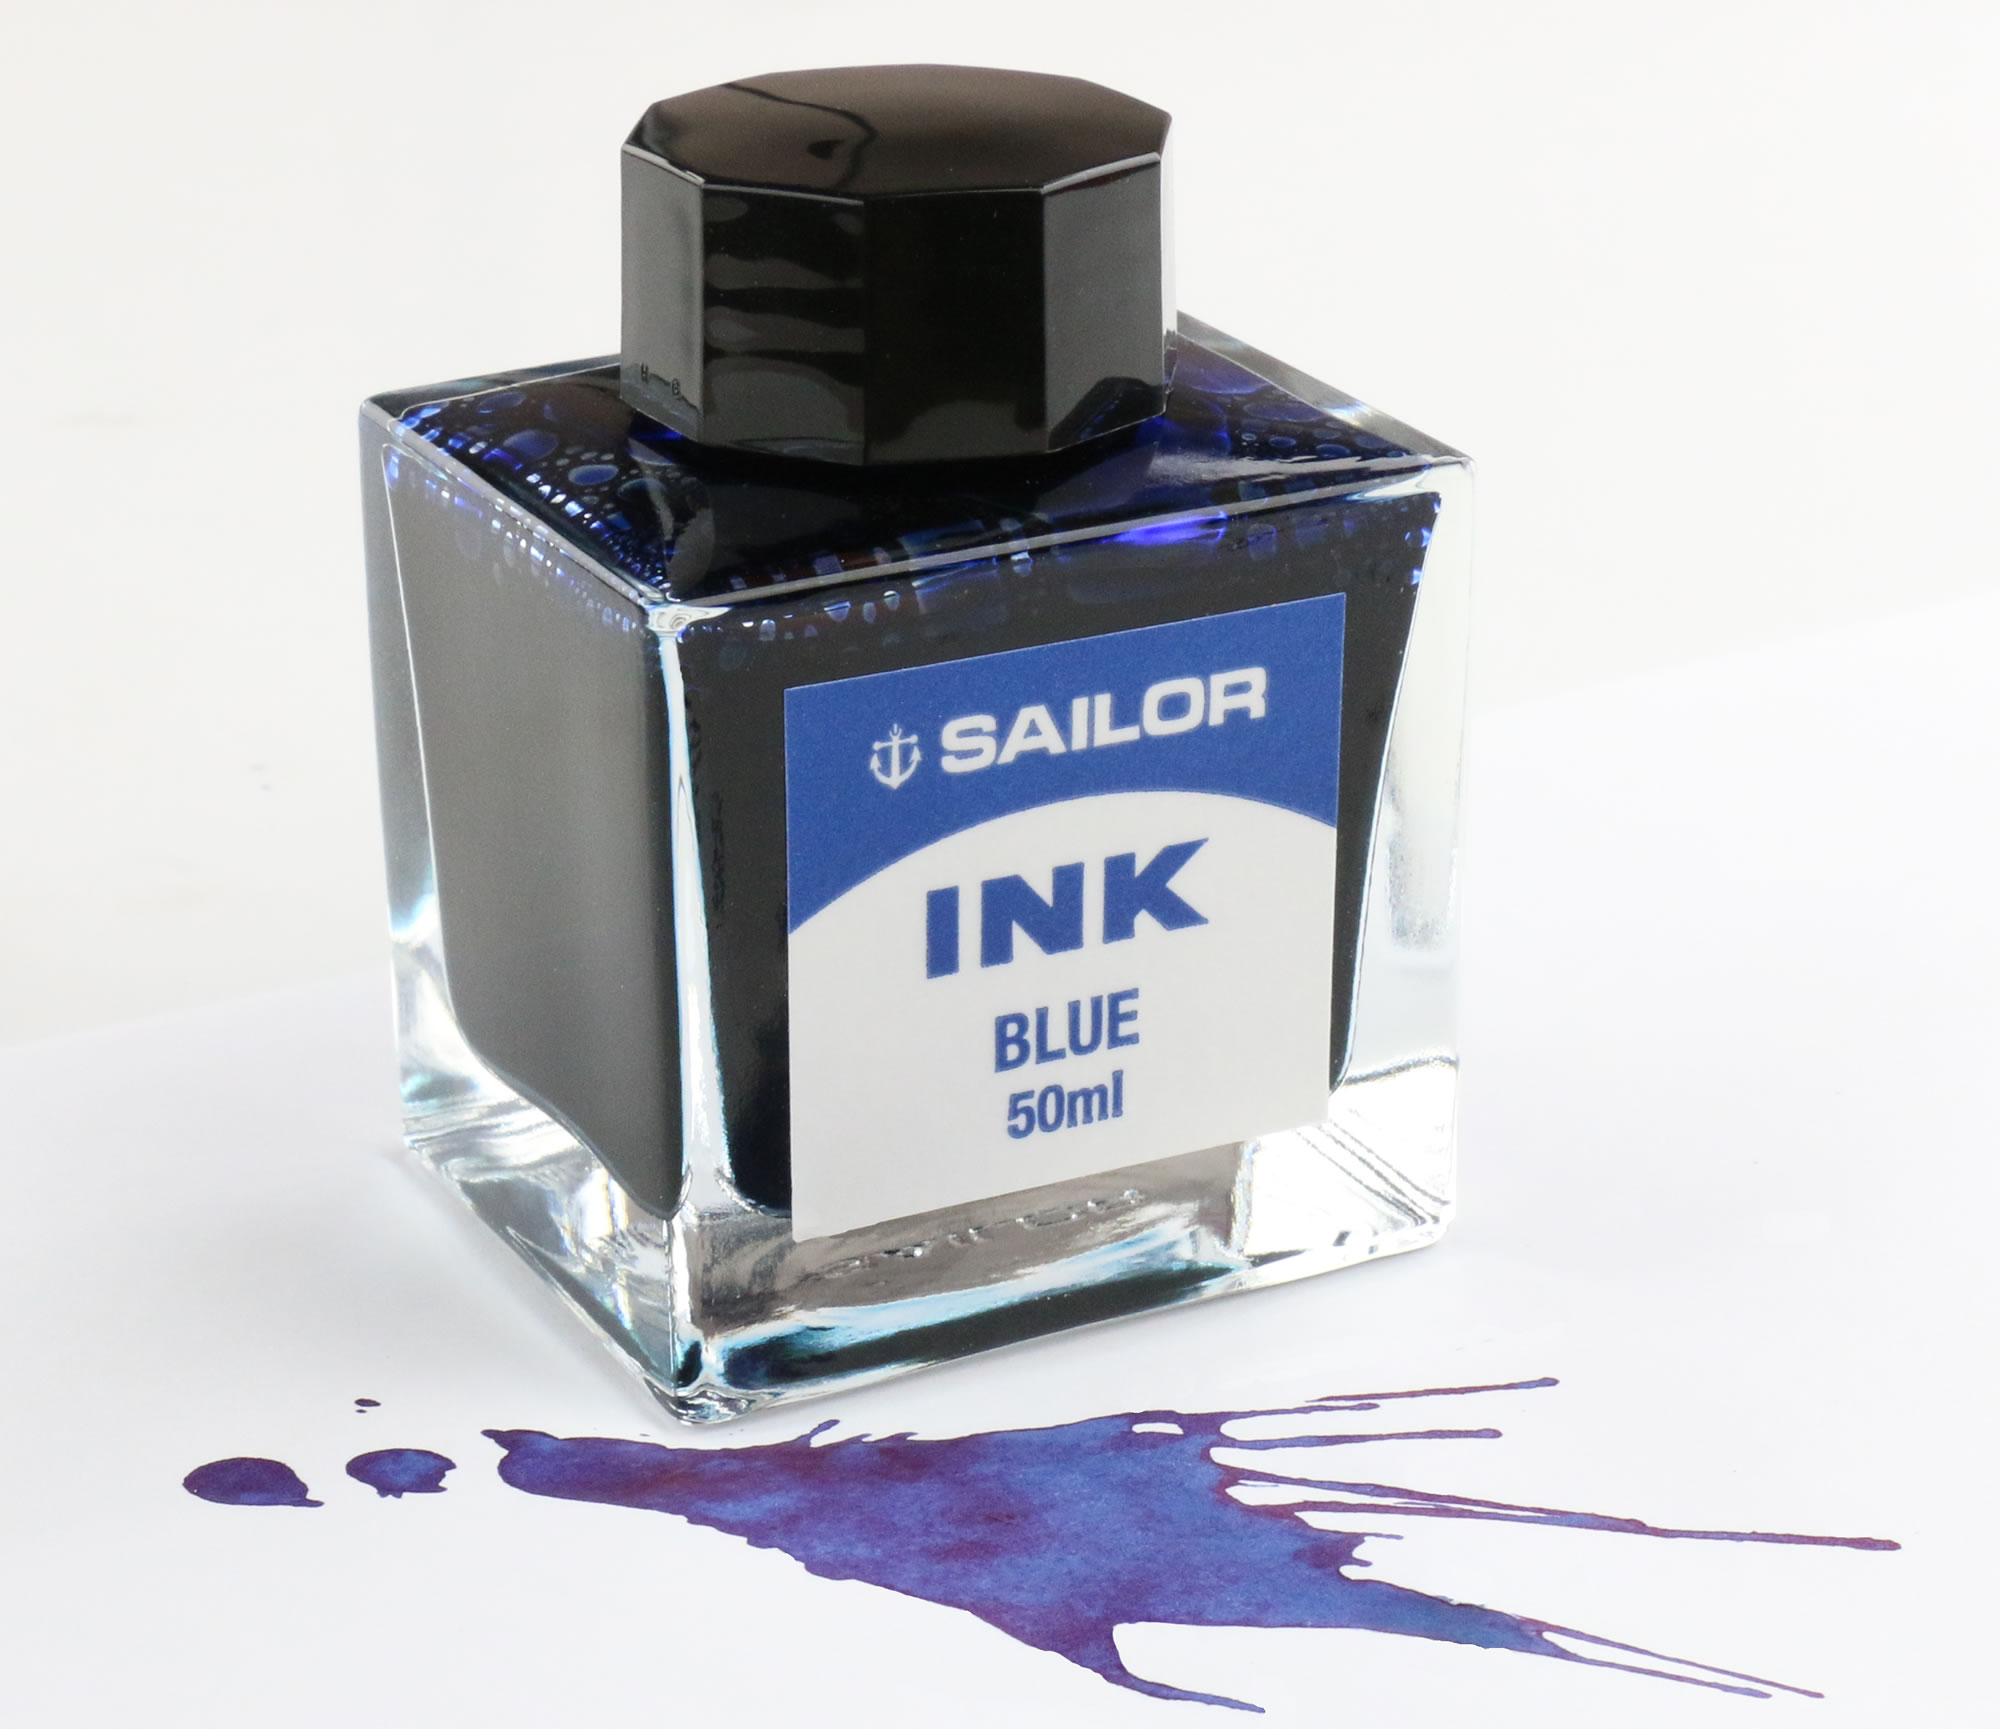 Sailor Blue Ink Review & Giveaway - Pen Chalet